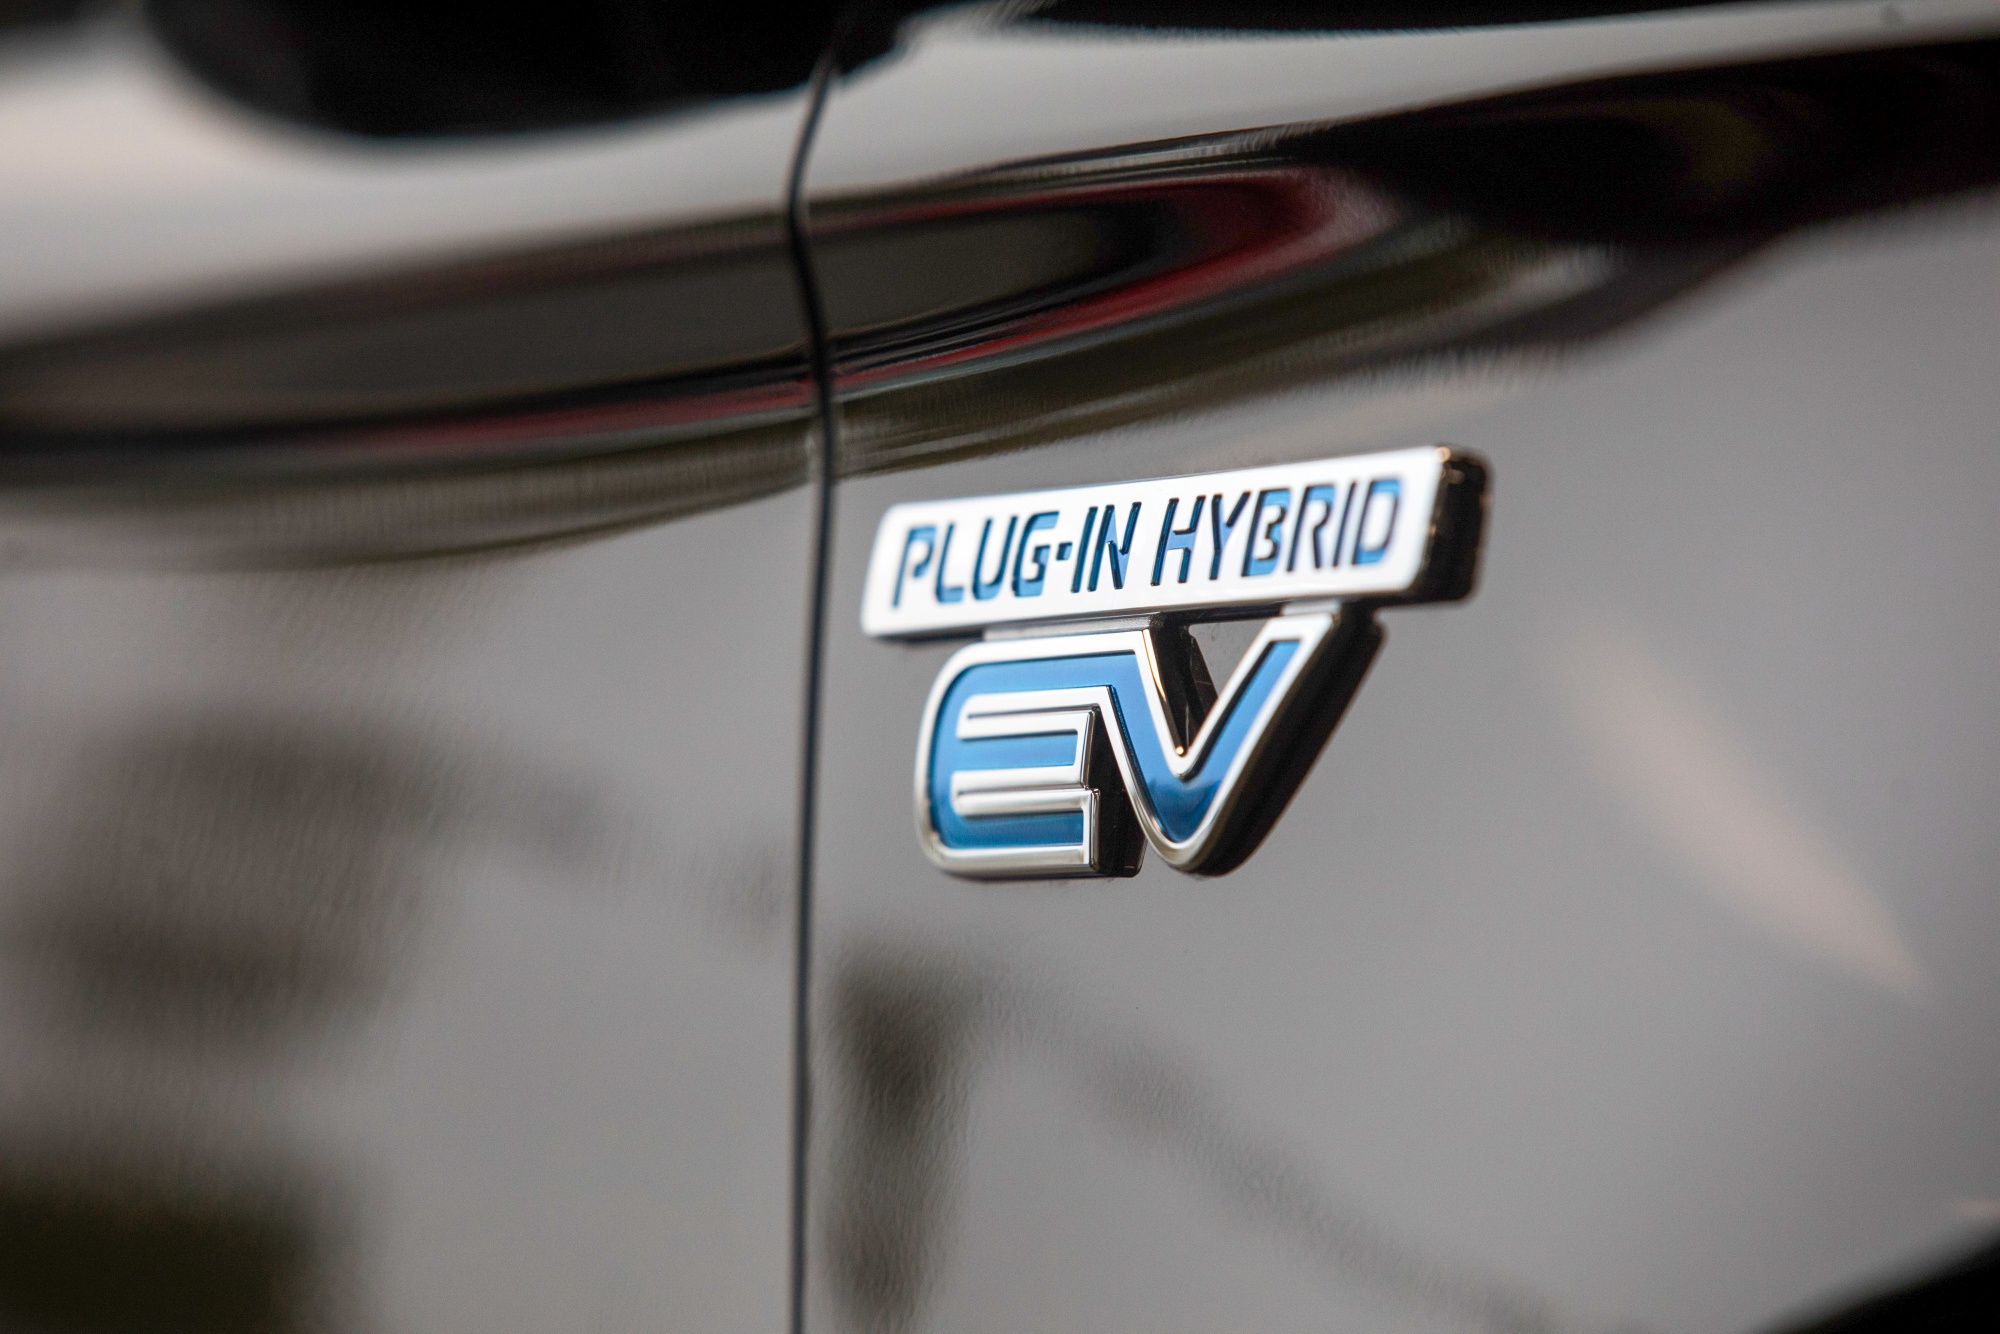 A plug-in hybrid badge on a Mitsubishi Outlander sport utility vehicle.